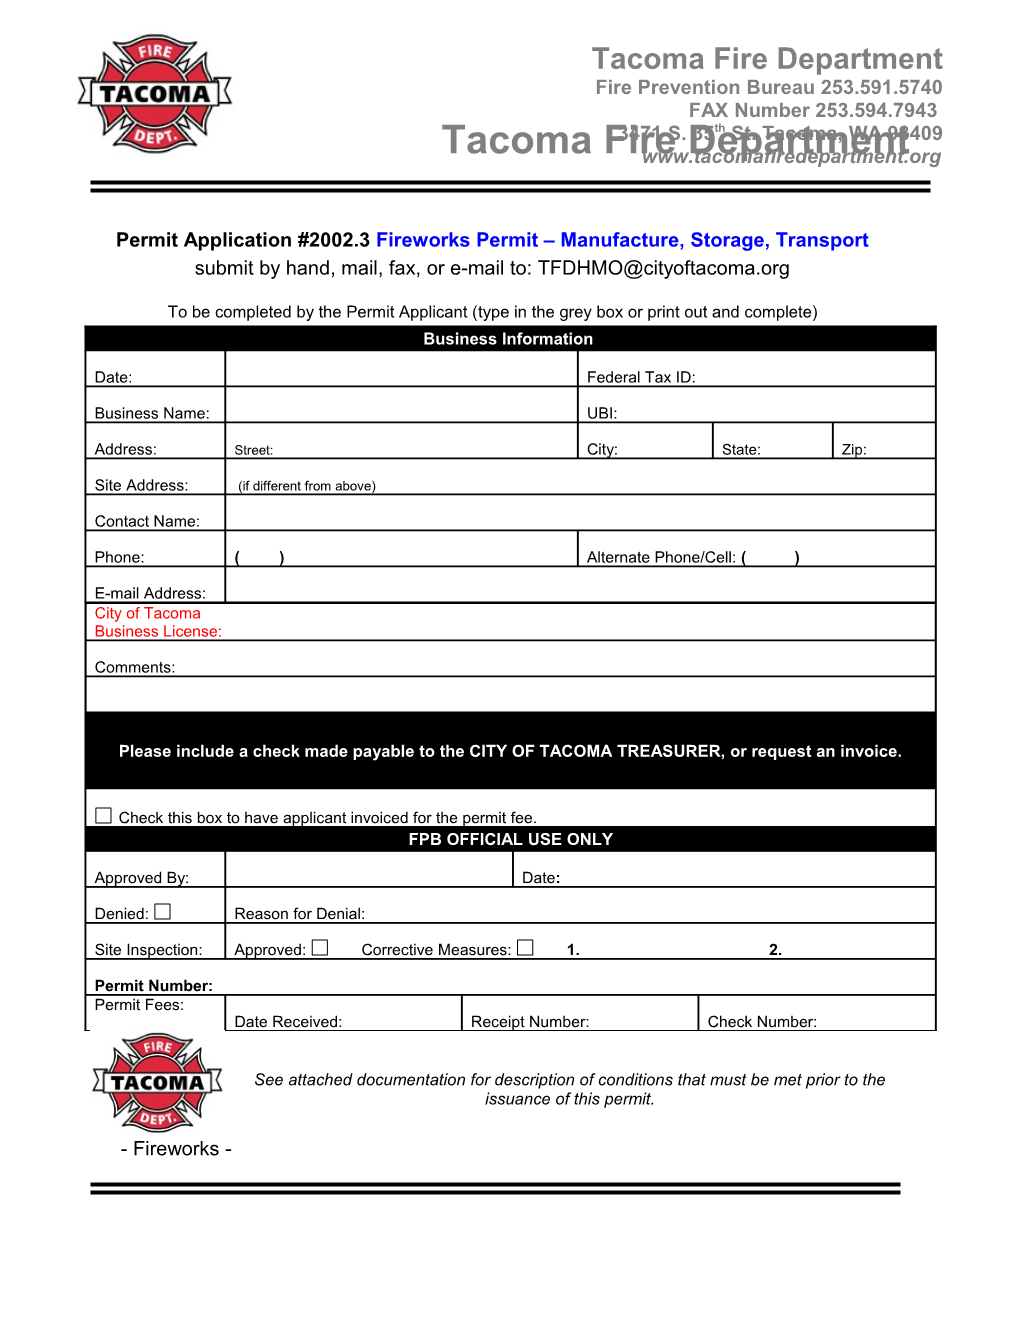 Permit Application #2002.3Fireworks Permit Manufacture, Storage, Transport